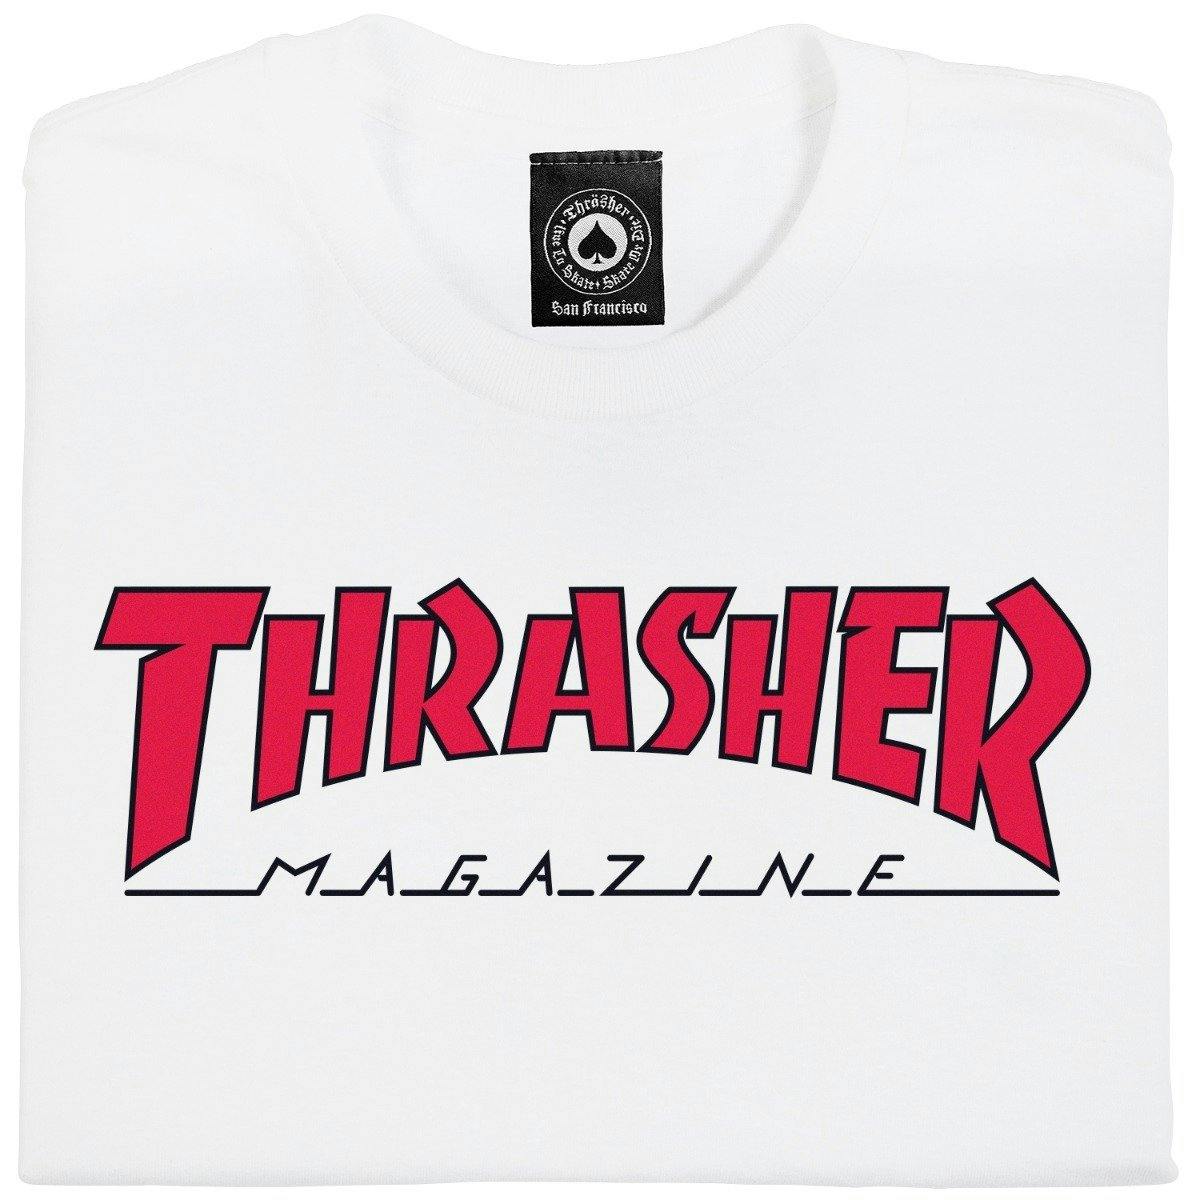 Trasher T-shirt